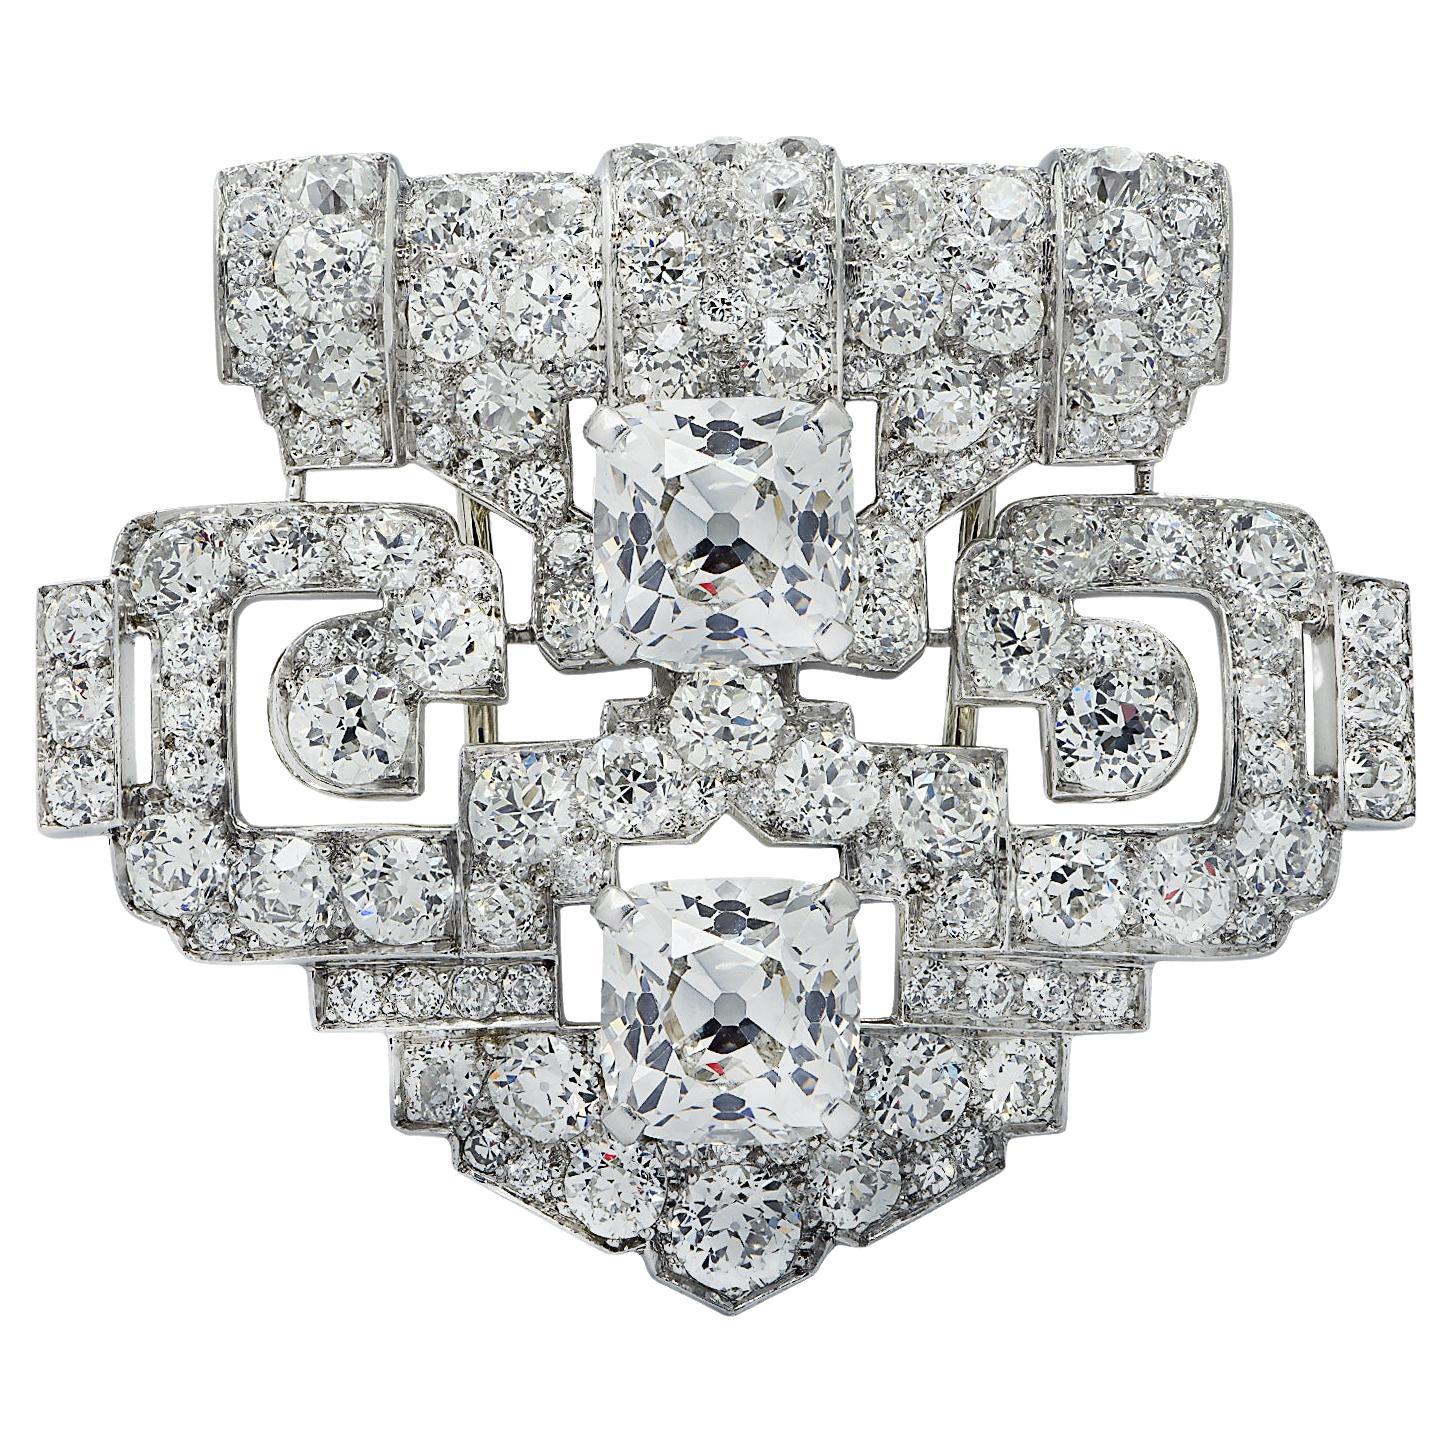 Cartier New York GIA Certified 11.24 Carat Old Mine Cushion Diamond Brooch